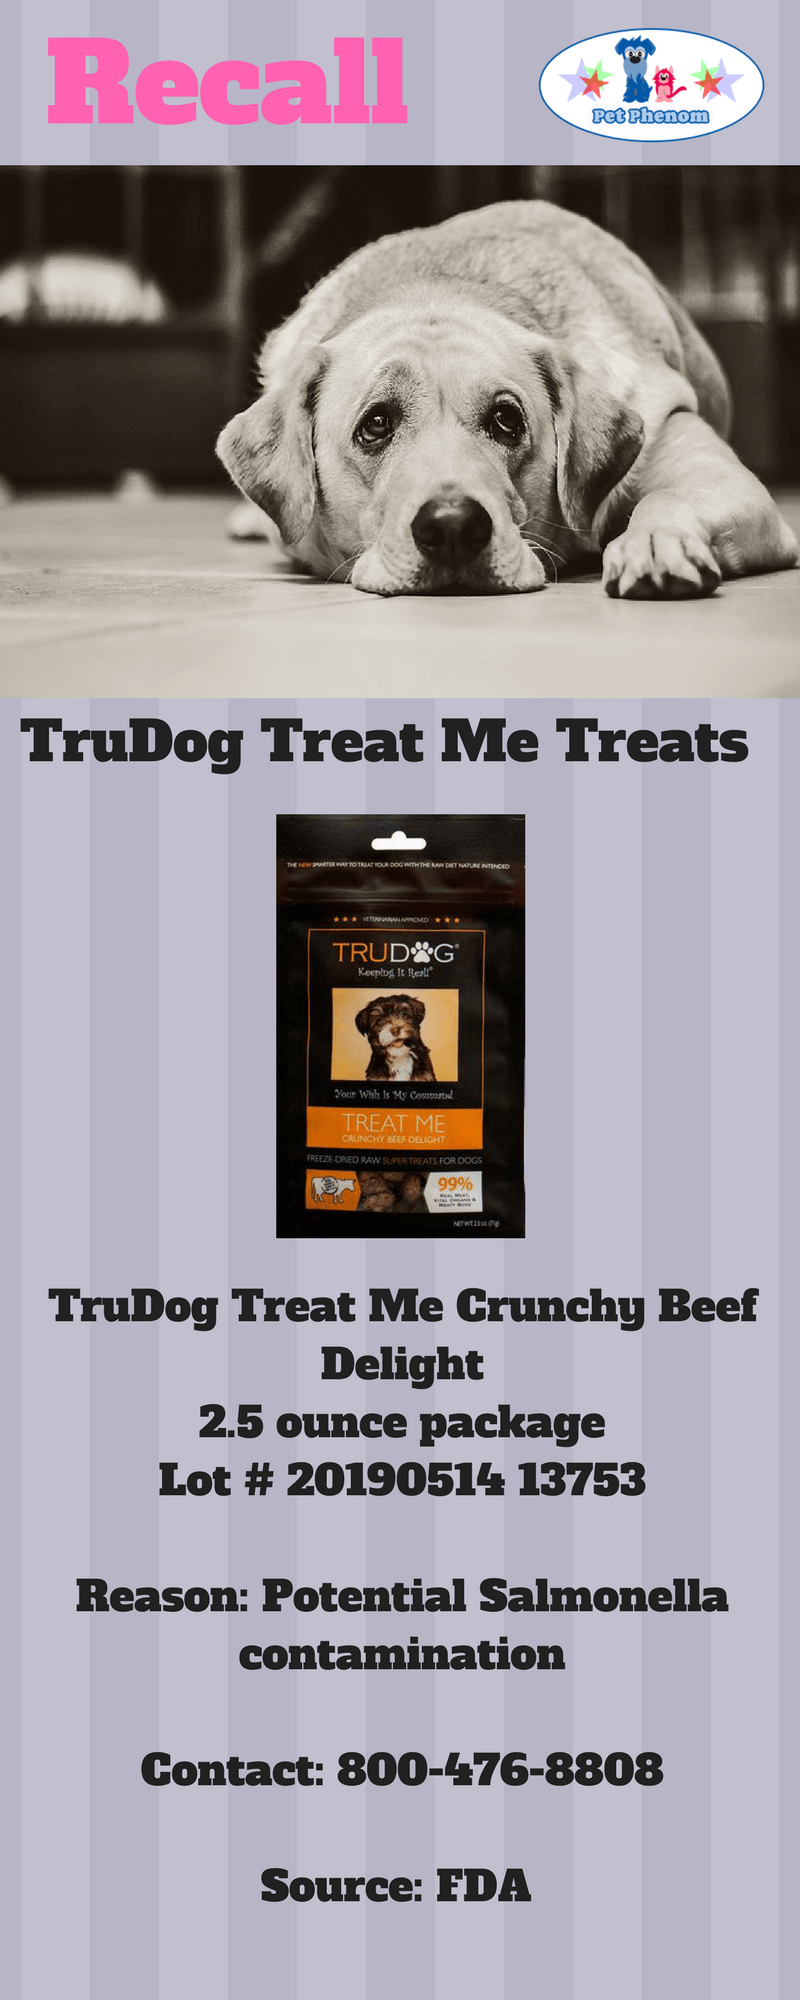 TruDog Dog Food Recall